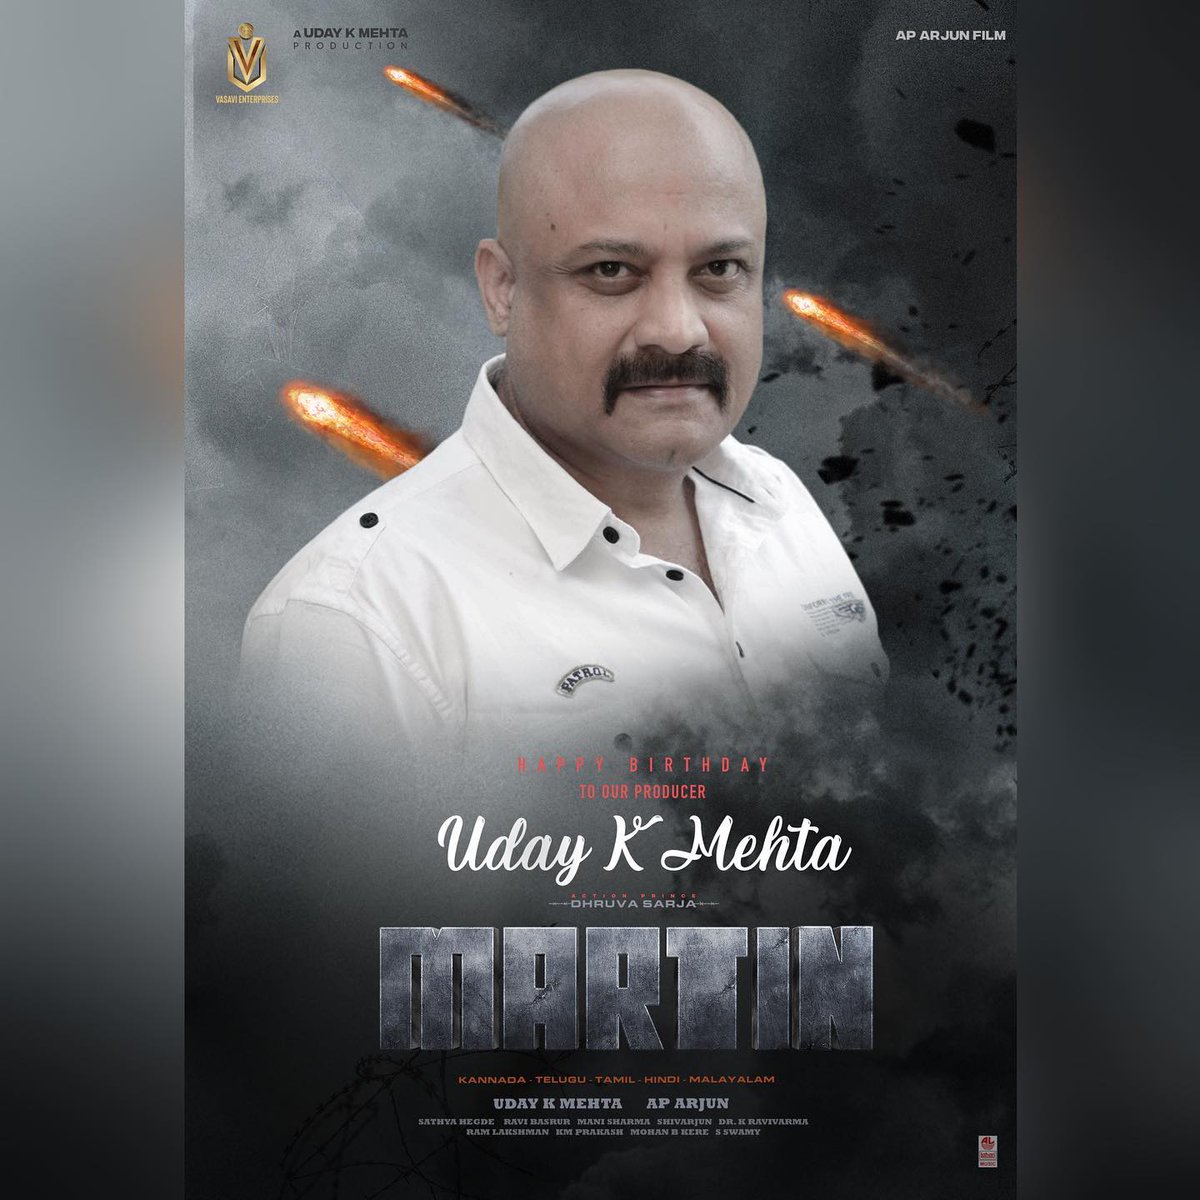 Wishing you many more happy returns of the day to our producer @princekukm sir 💐🎉

ಮಾರ್ಟಿನ್- మార్టిన్- மார்ட்டின்- മാർട്ടിൻ- मार्टिन- MARTIN

INDIA'S BIGGEST ACTION SAGA

#MartinTheMovie
#indiasbiggestactionsaga